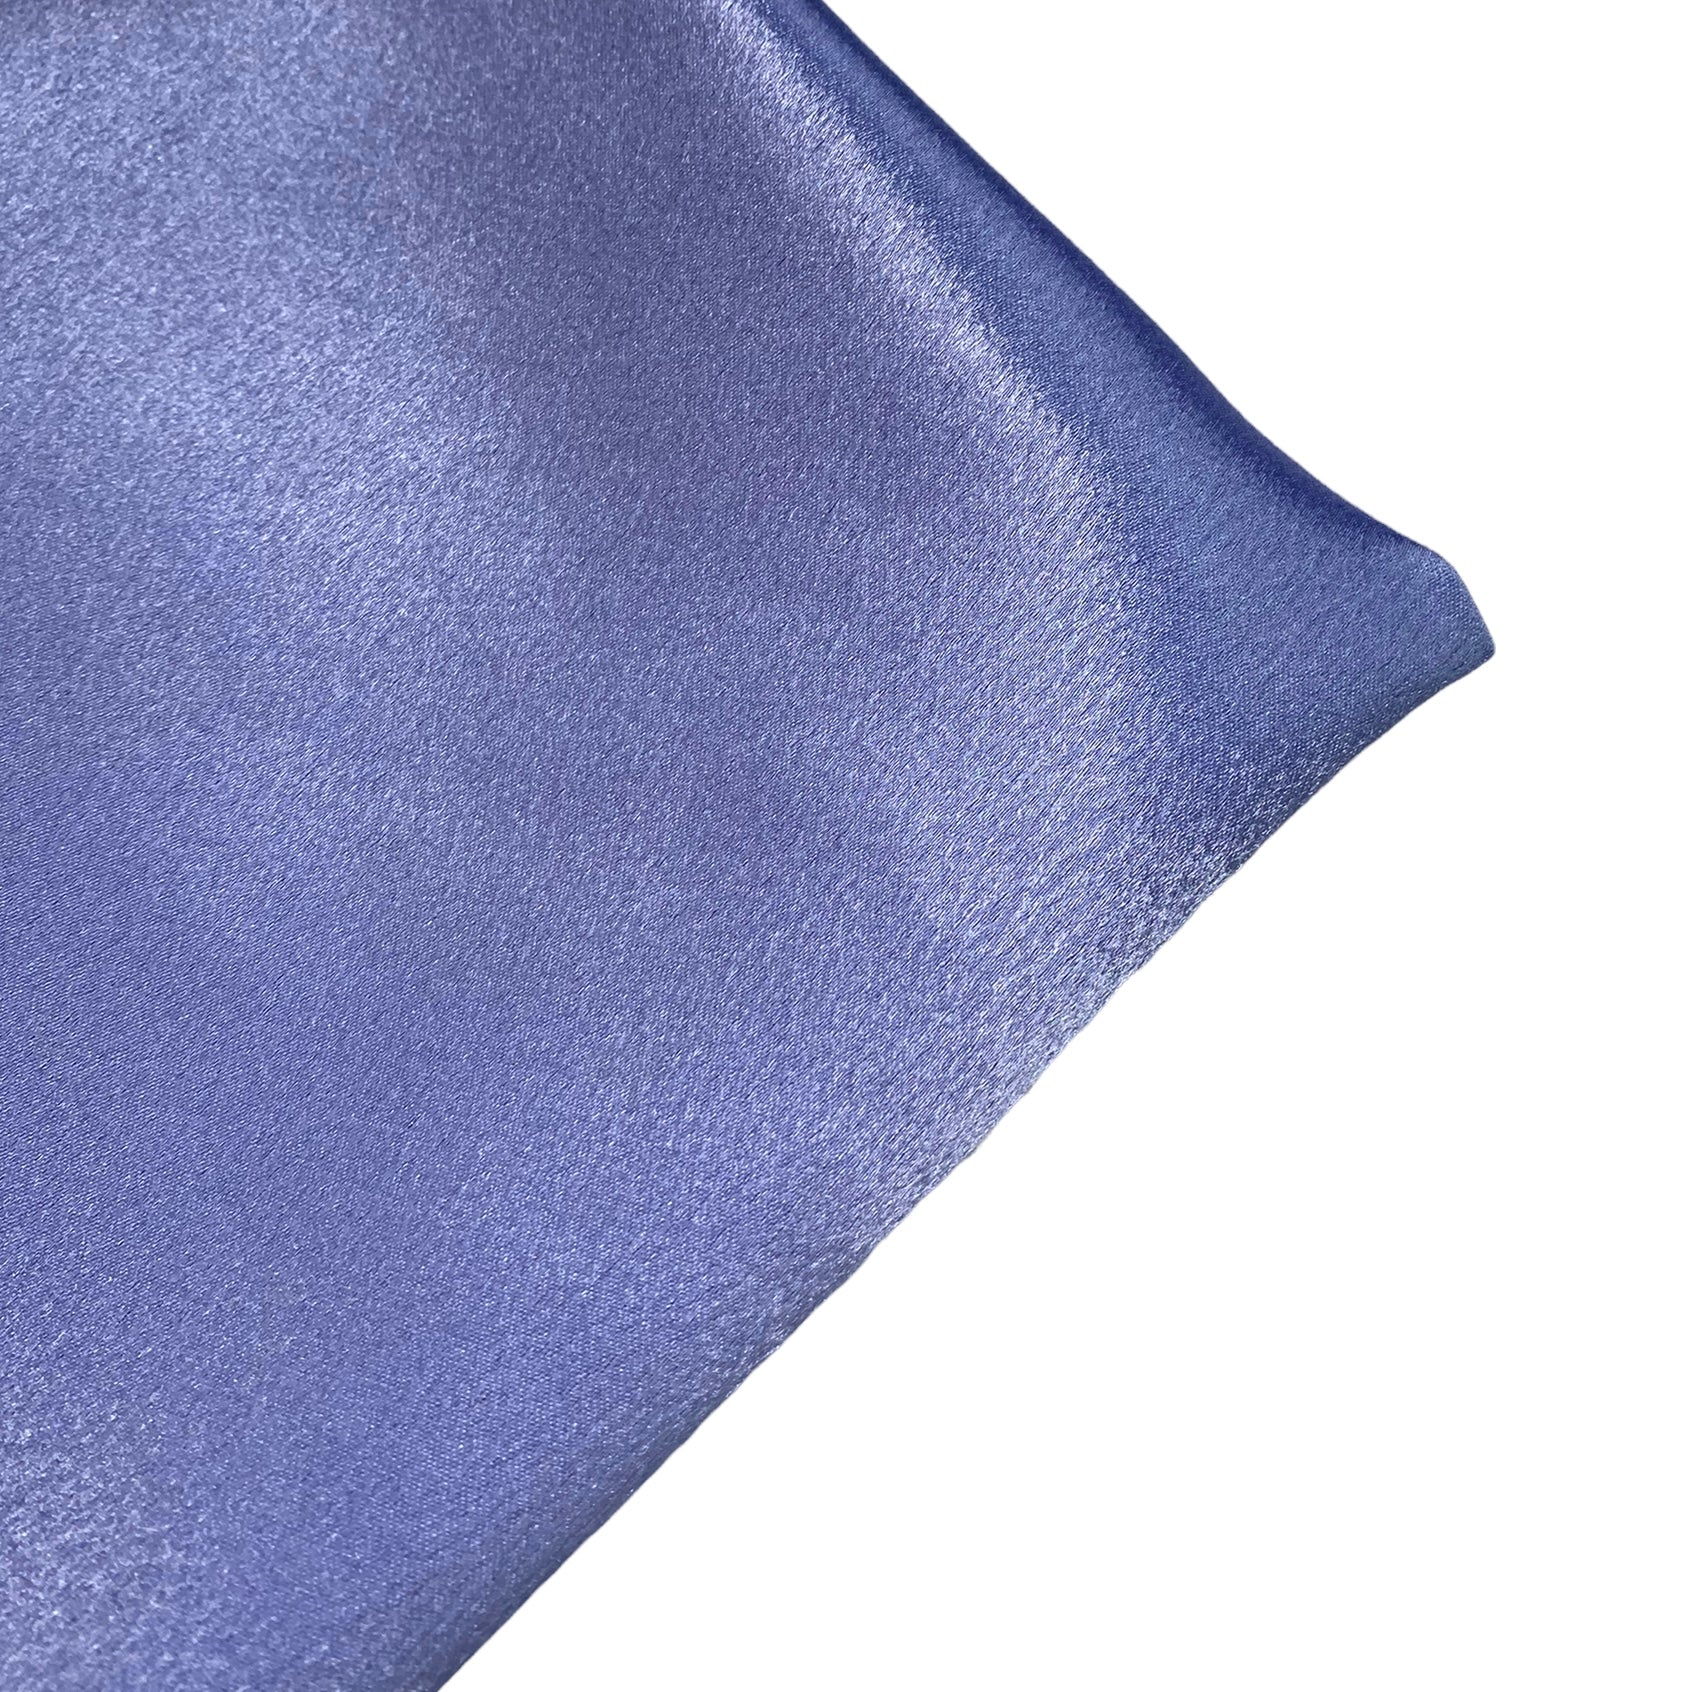 Polyester Crepe Back Satin - 44” - Lilac